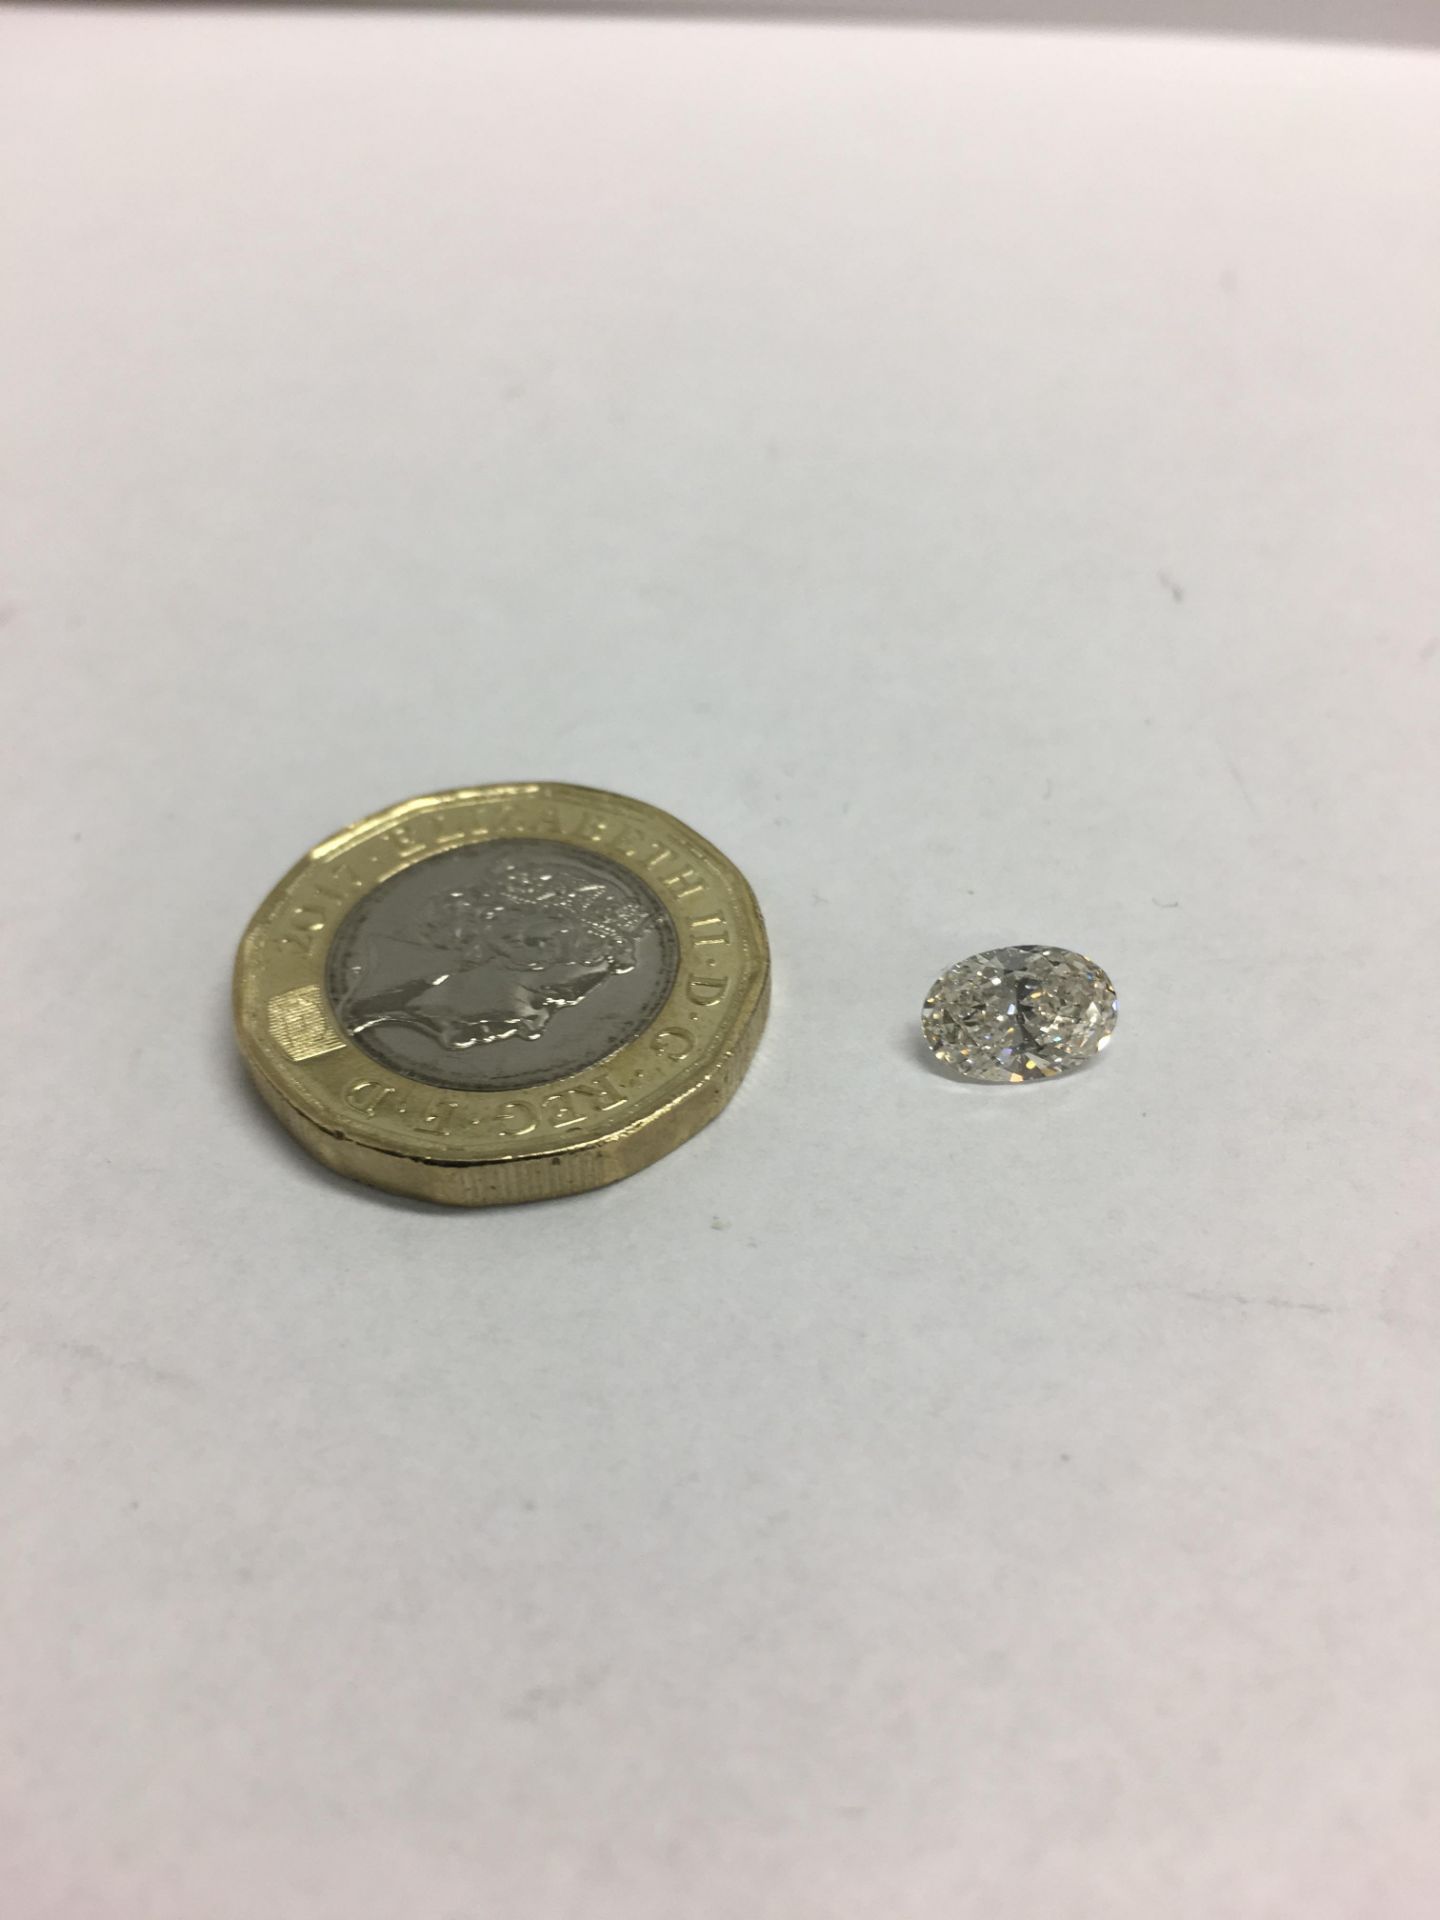 1.09ct oval cut Diamond - Image 2 of 5